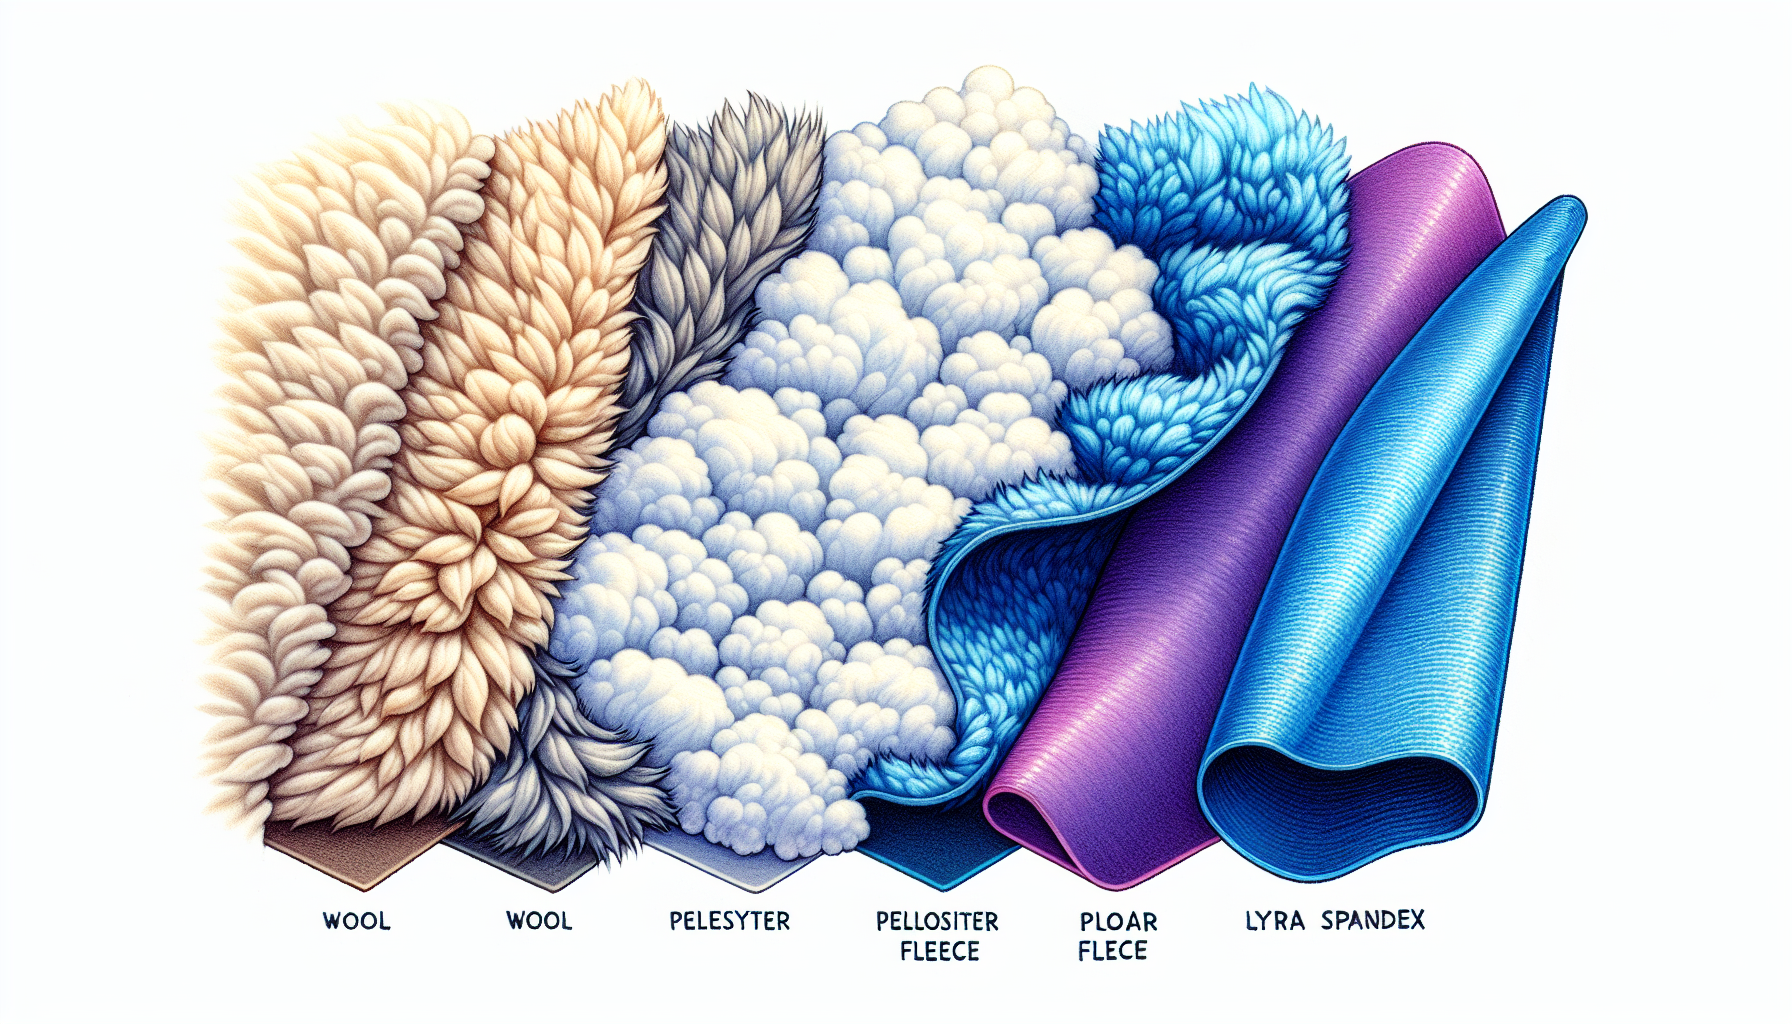 Illustration of various fleece fabric types